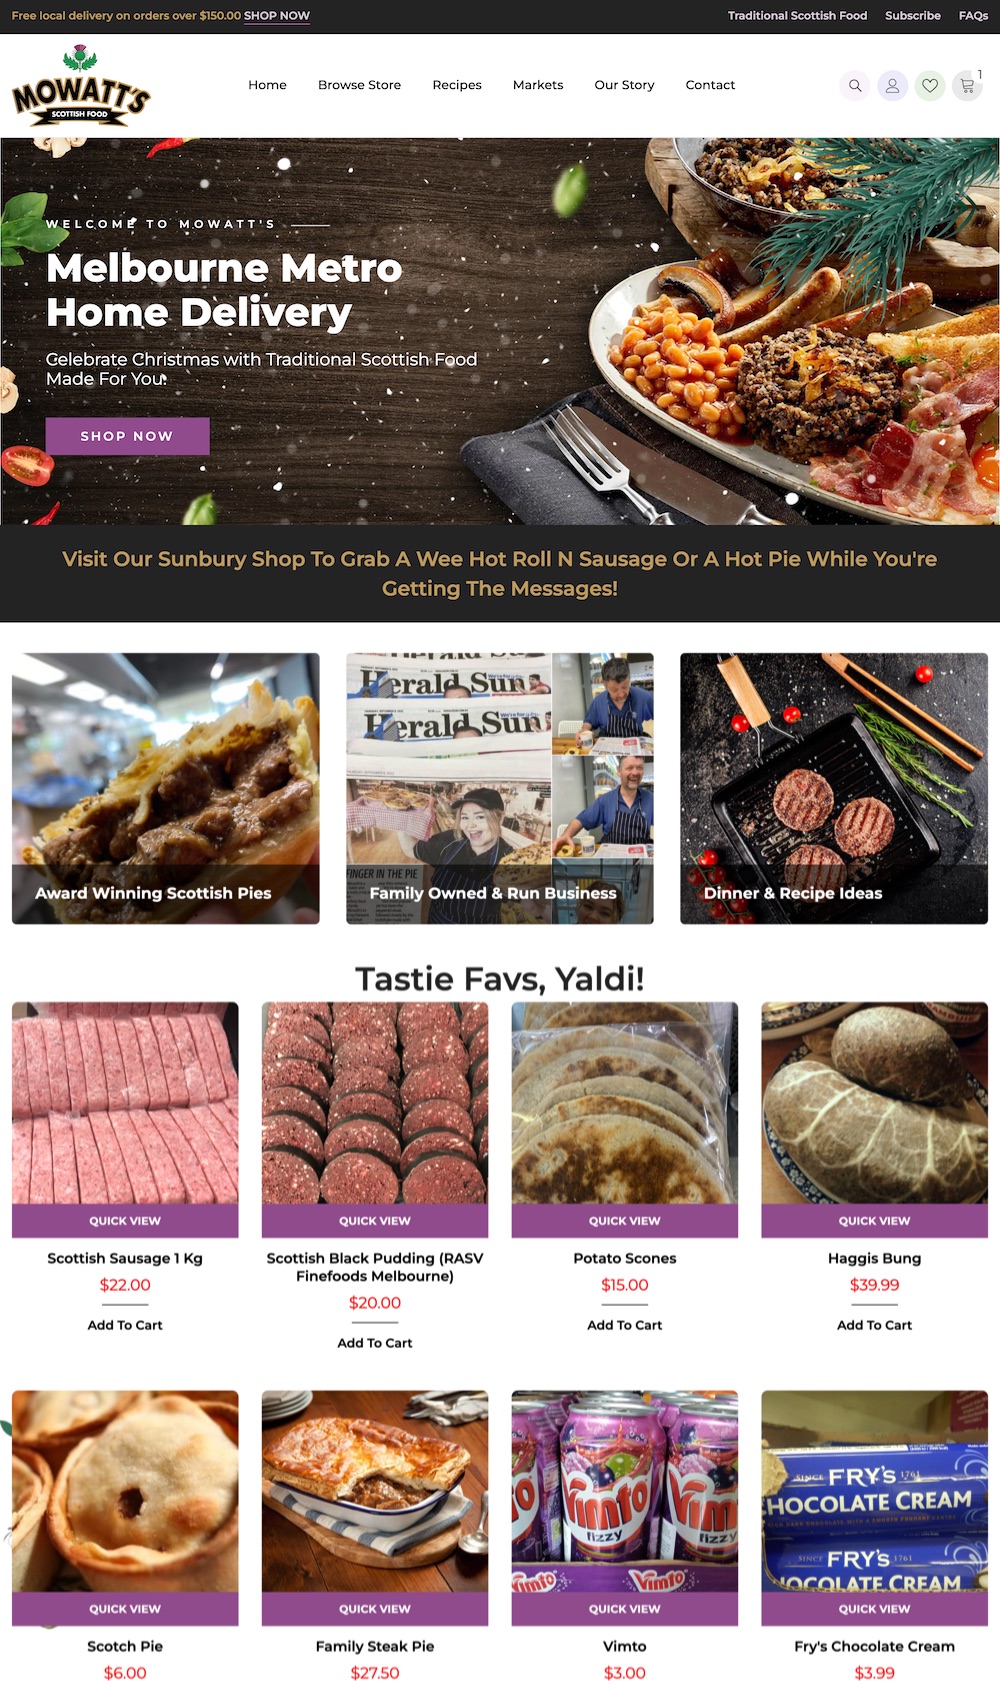 mowatts-scottish-food-home-page-web